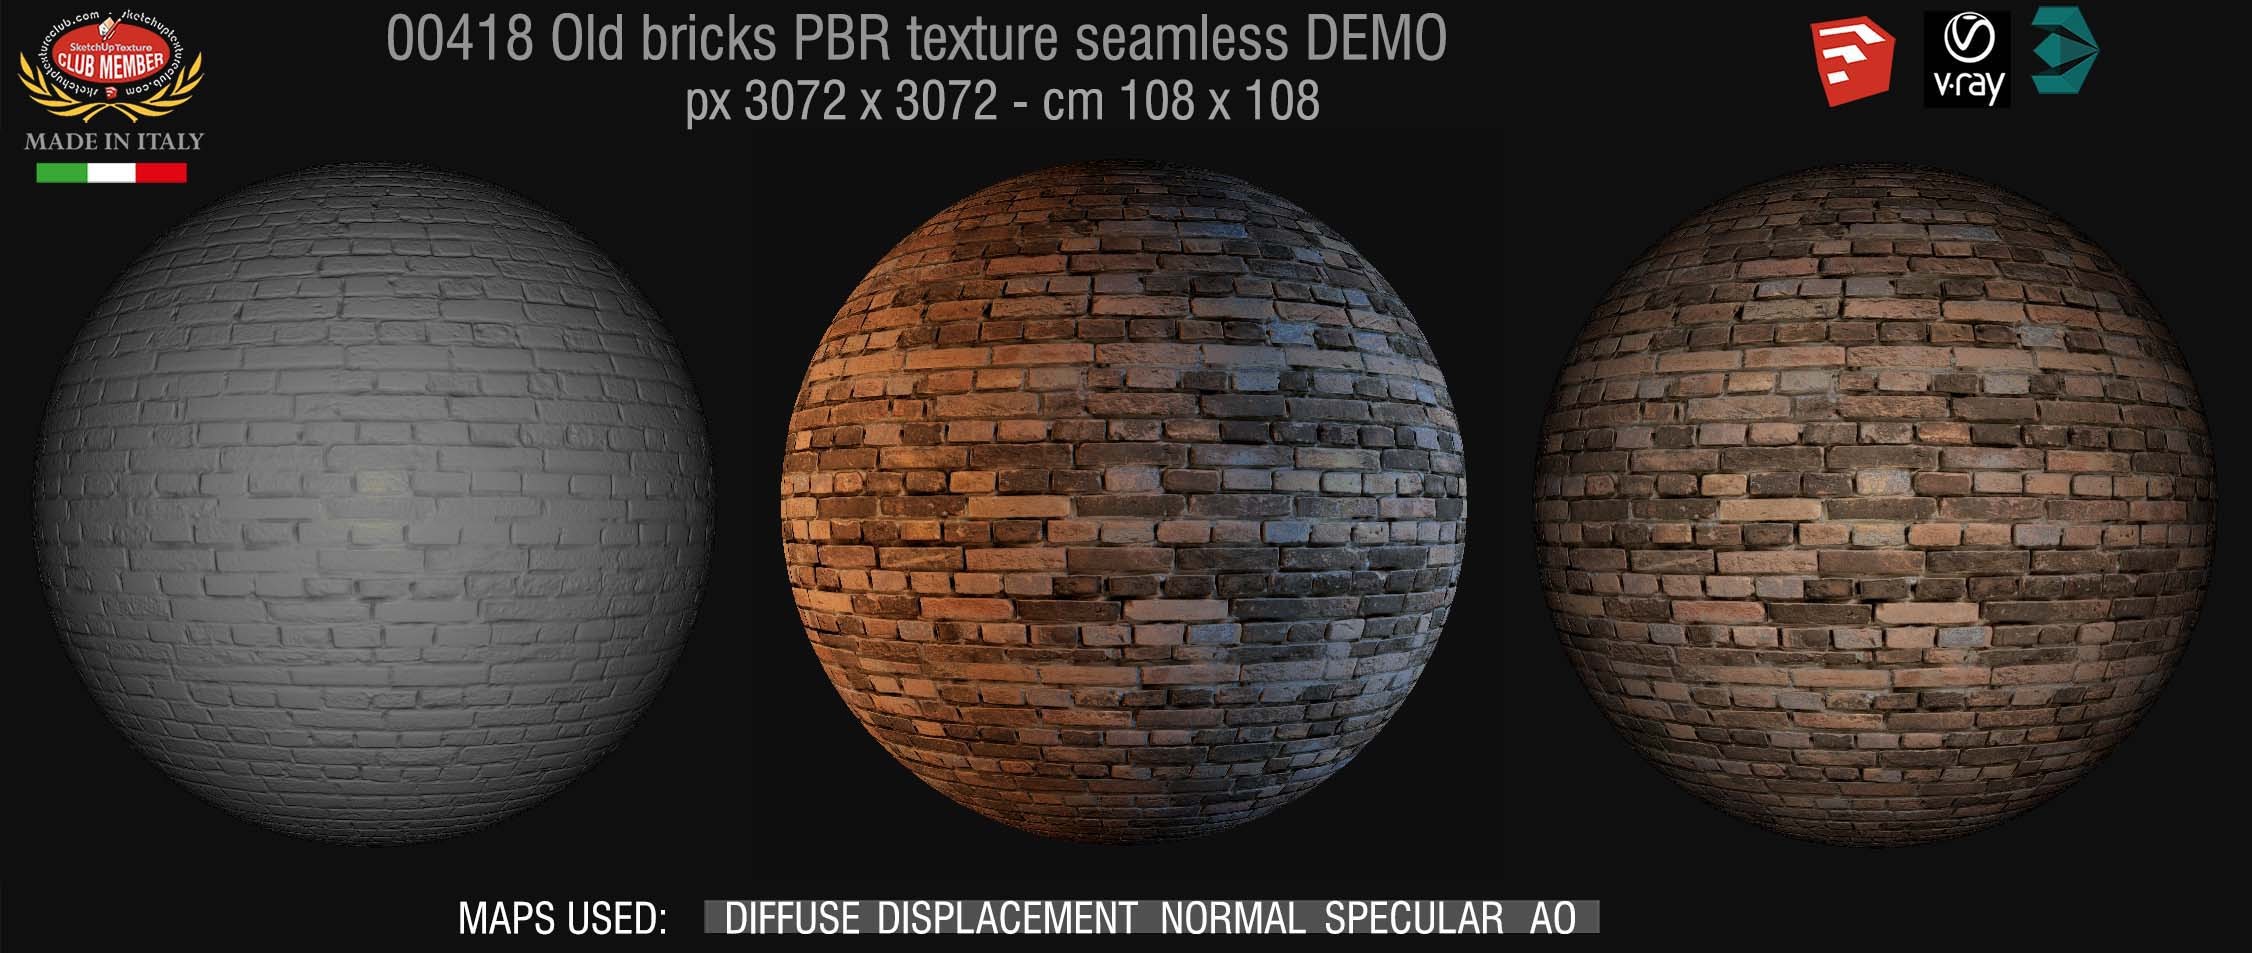 00418 Old bricks PBR texture seamless DEMO